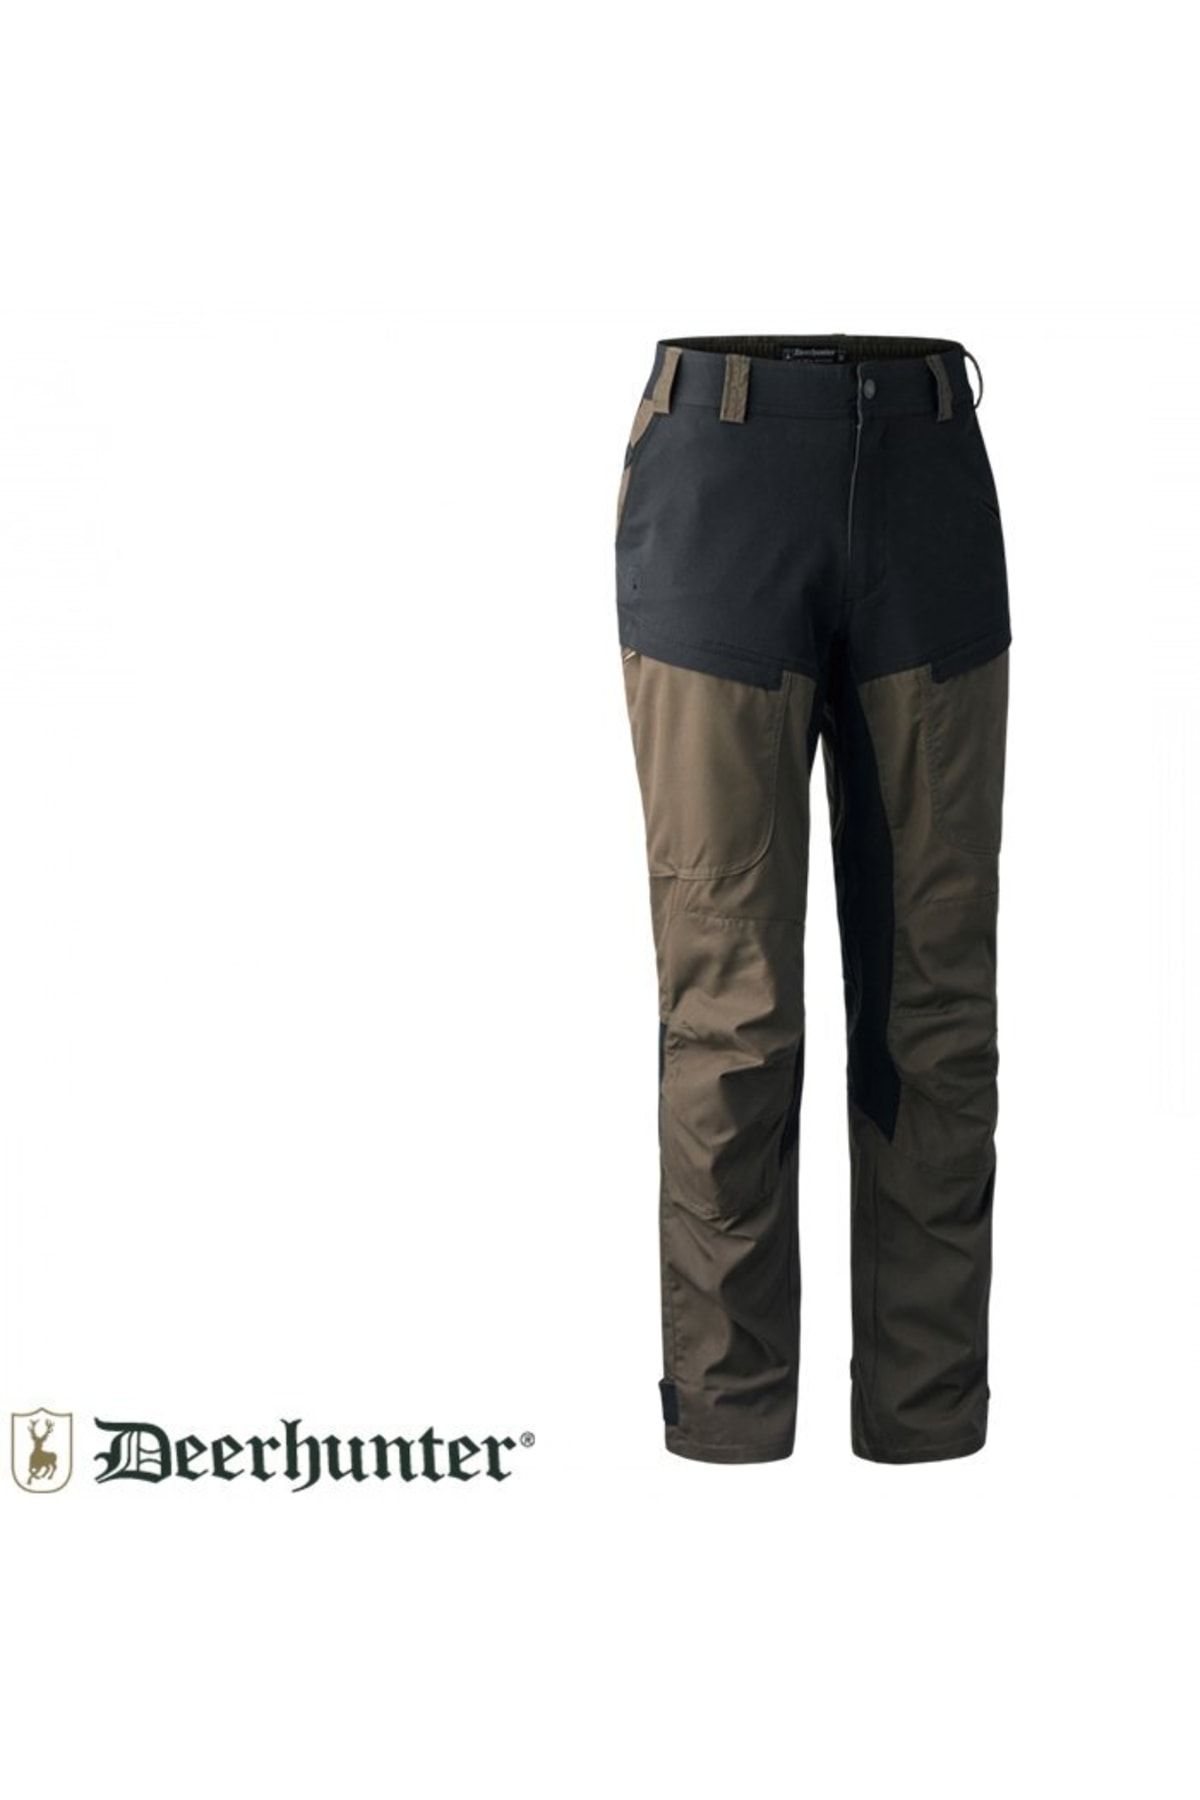 Deerhunter Strike Su Geçirmez Yeşil Pantolon 56